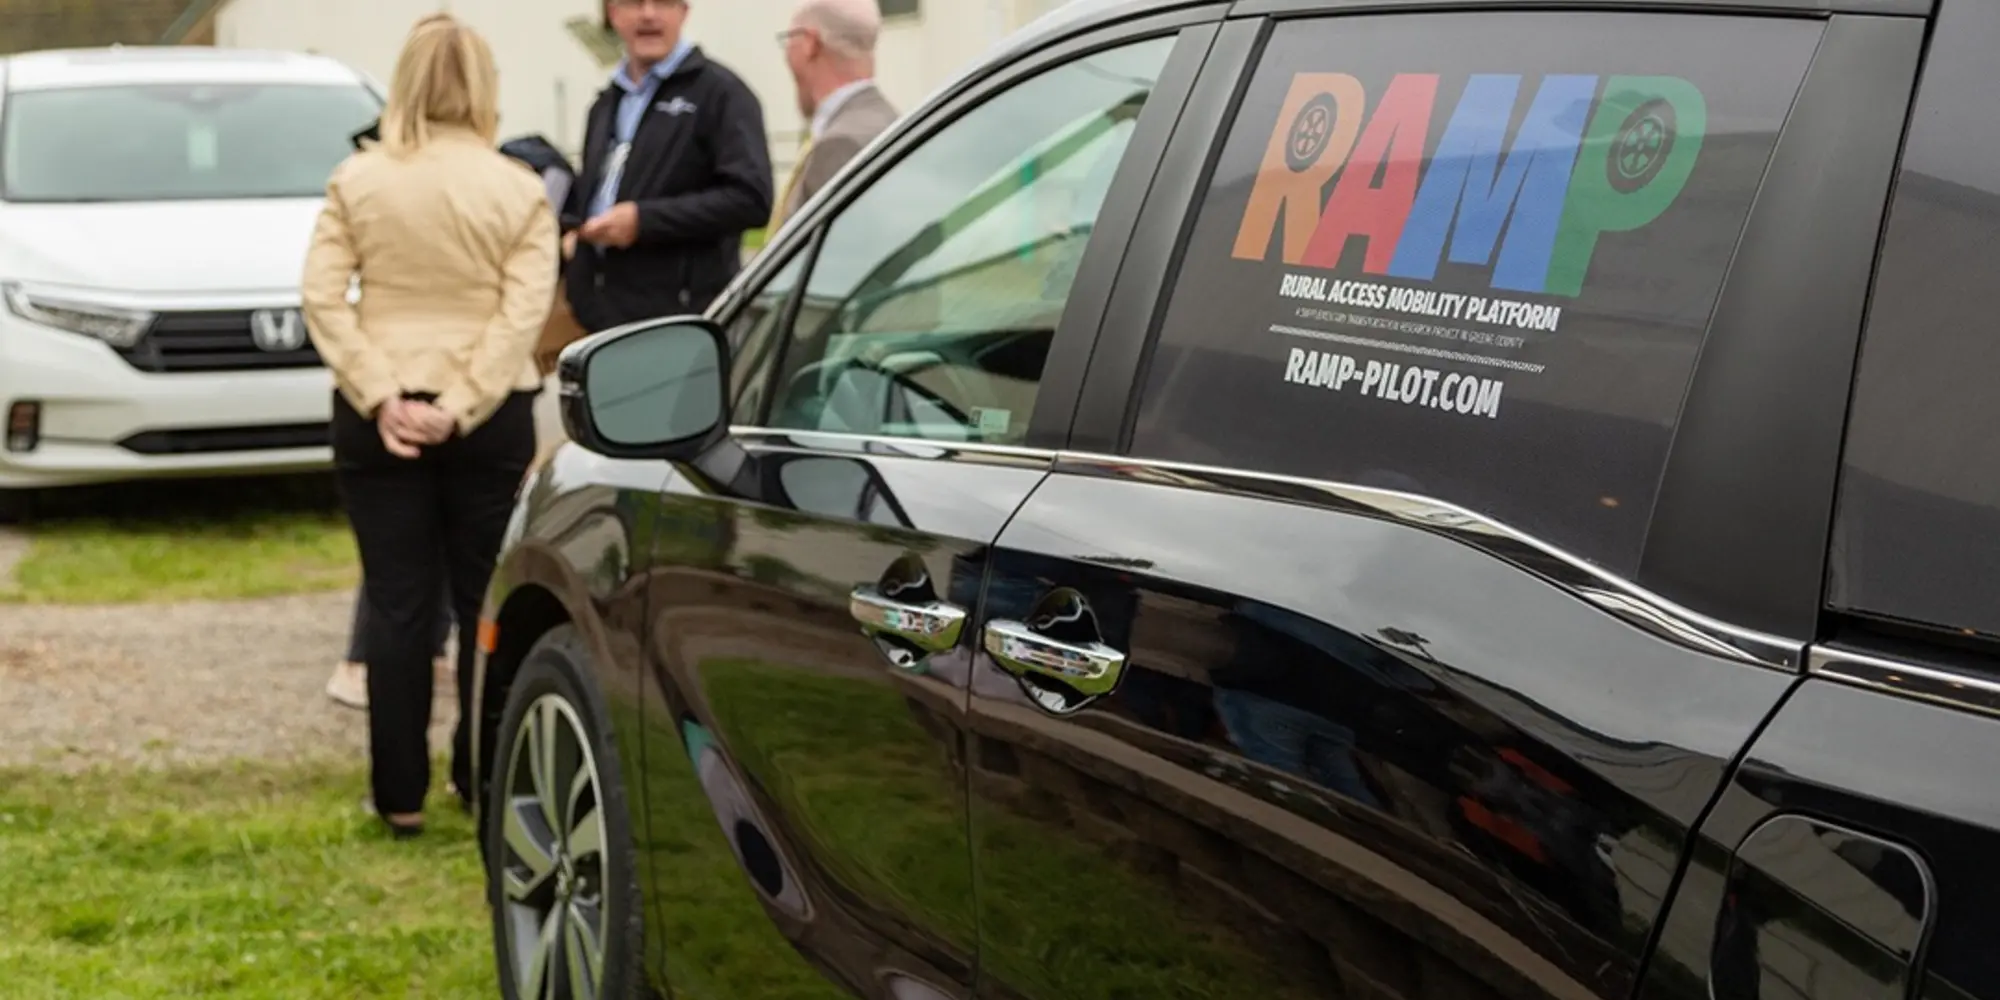 Minivan with the "RAMP" logo